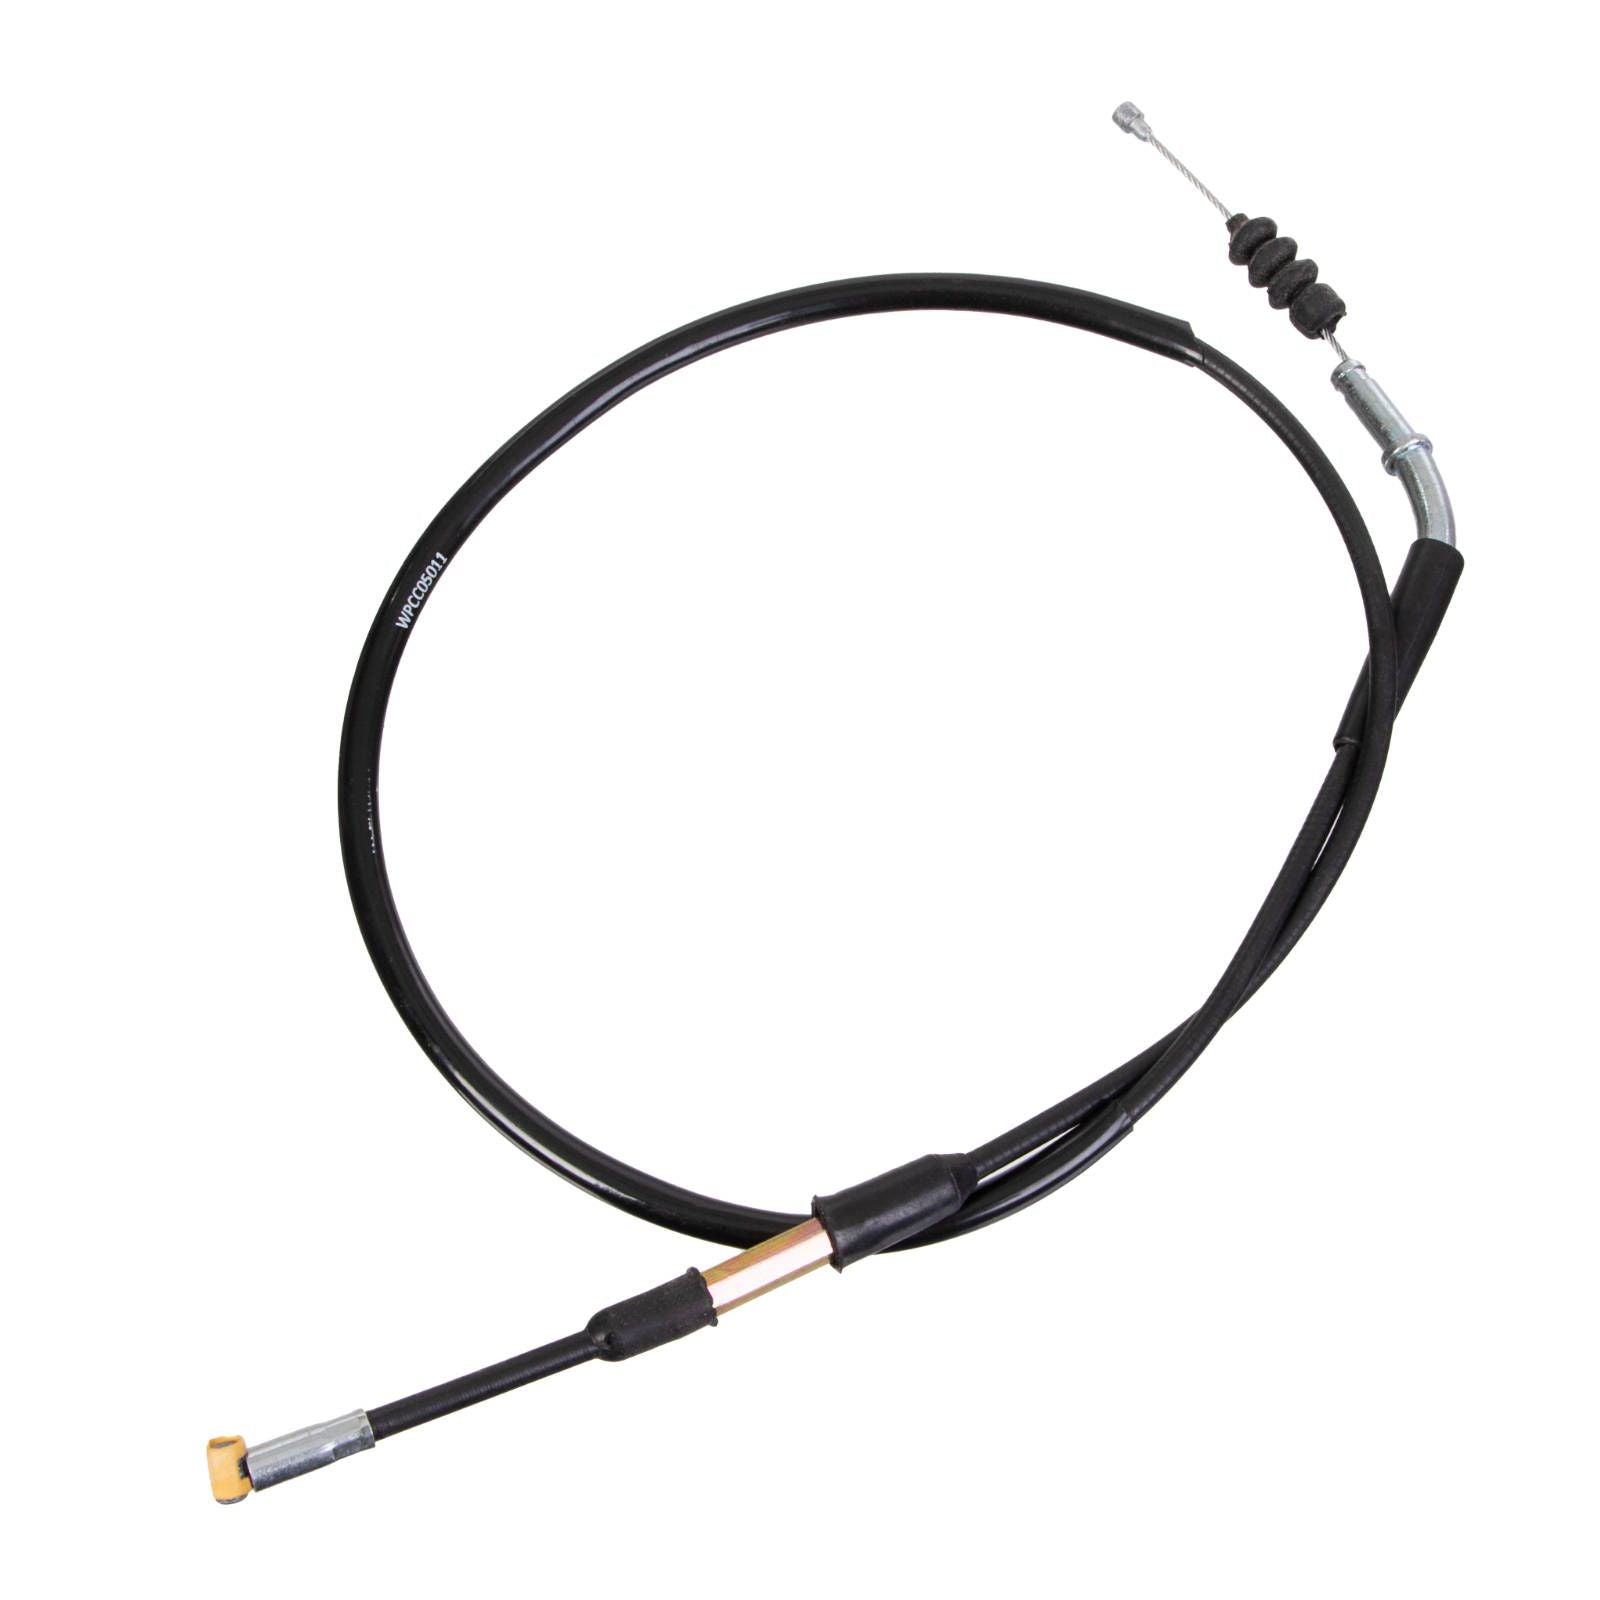 New WHITES Clutch Cable For Suzuki RMZ250 2007-2009 #WPCC05011